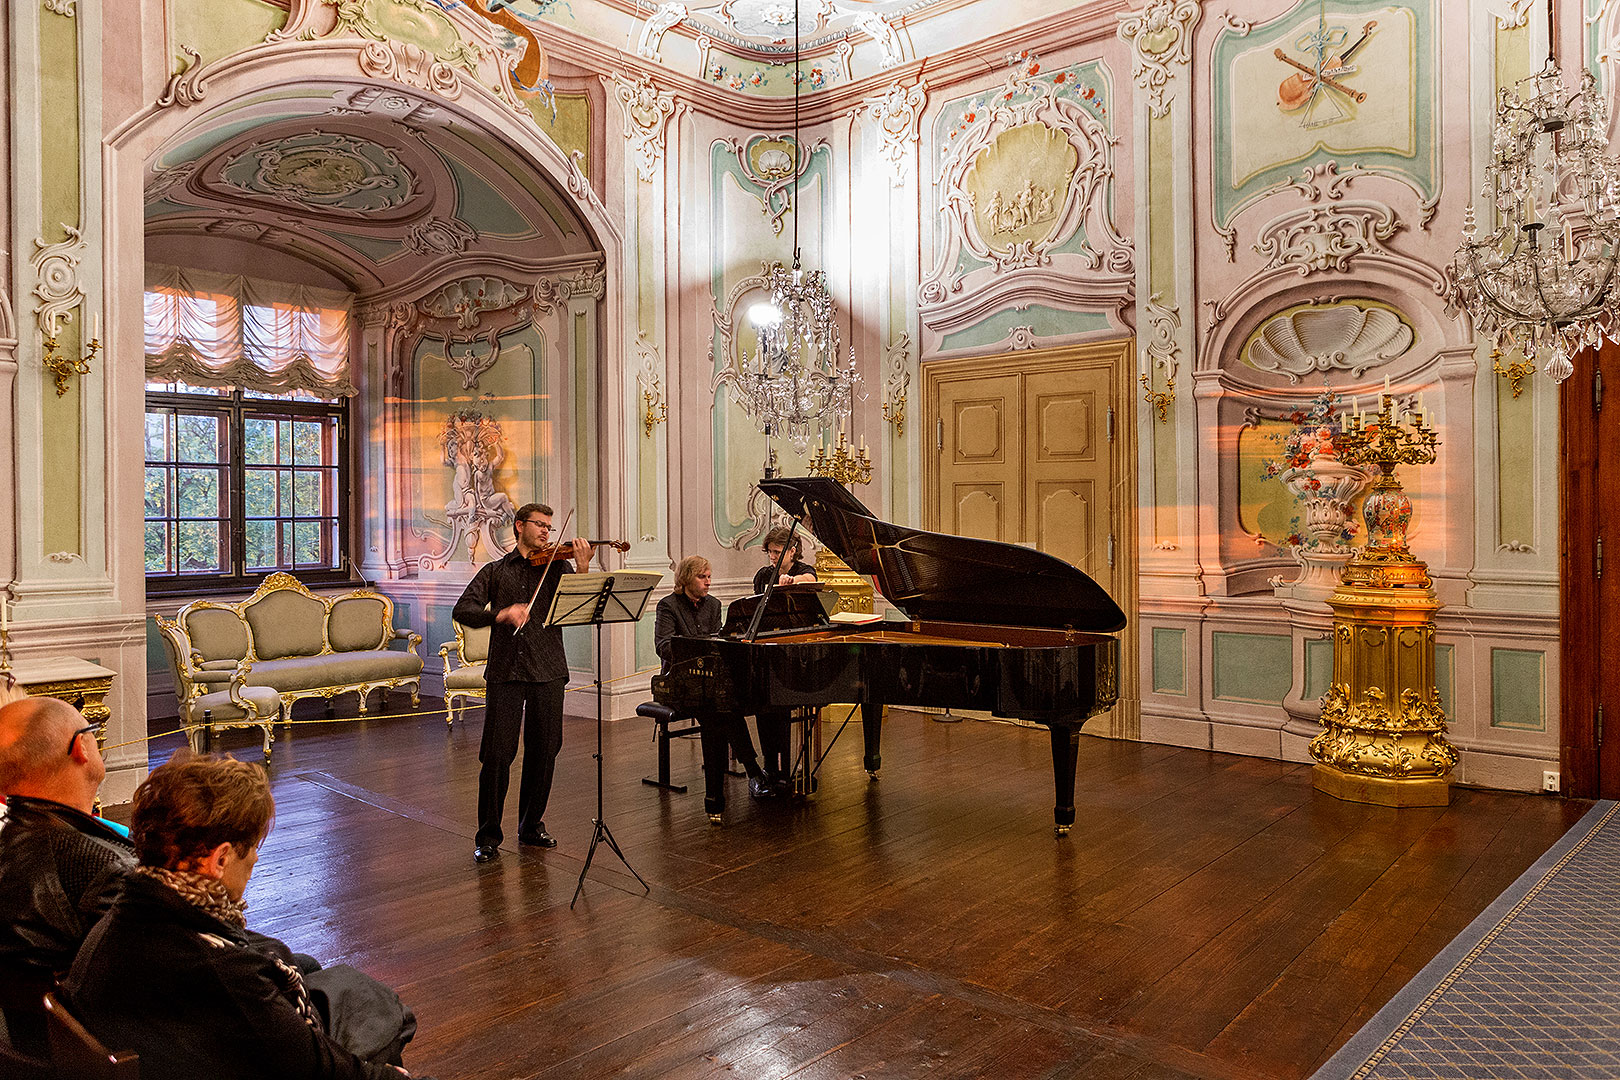 Czech Music Evening, Jan Fišer (violin) and Ivo Kahánek (piano), 2.7.2014, Chamber Music Festival Český Krumlov